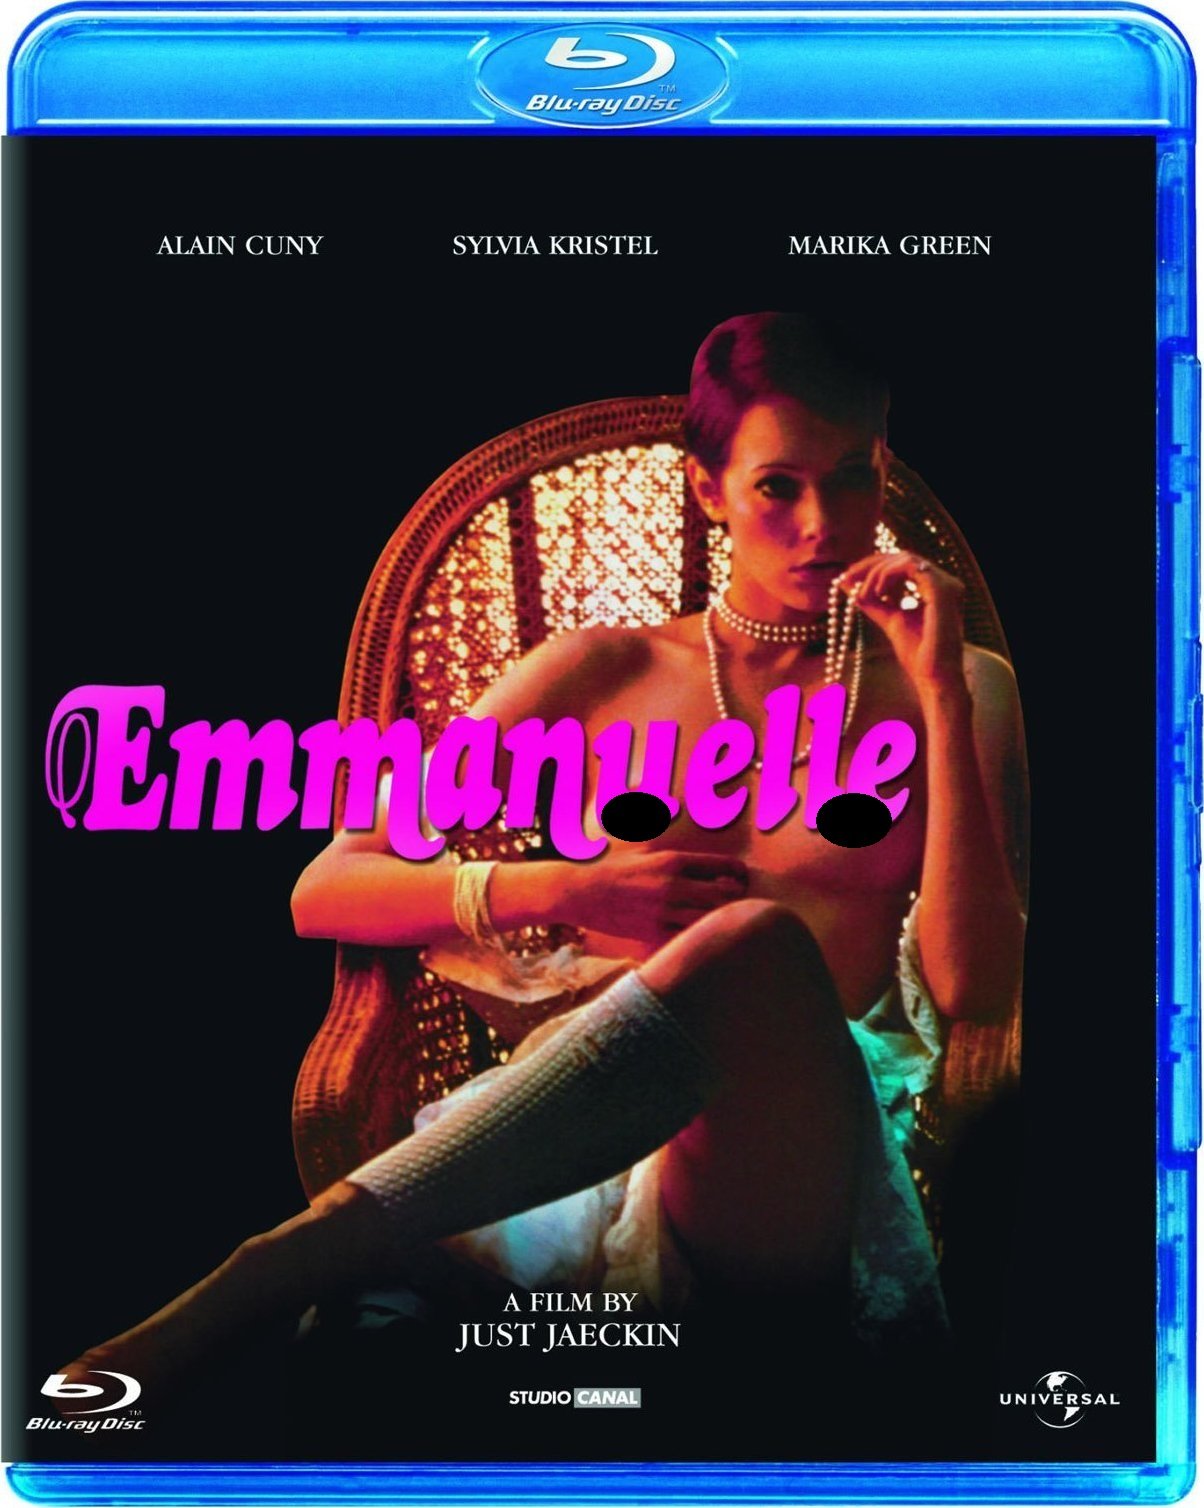 [艾曼纽1].Emmanuelle.1974.BluRay.1080p.AVC.DTS-HD.MA.2.0-F13@HDSpace     33.32G-2.jpg